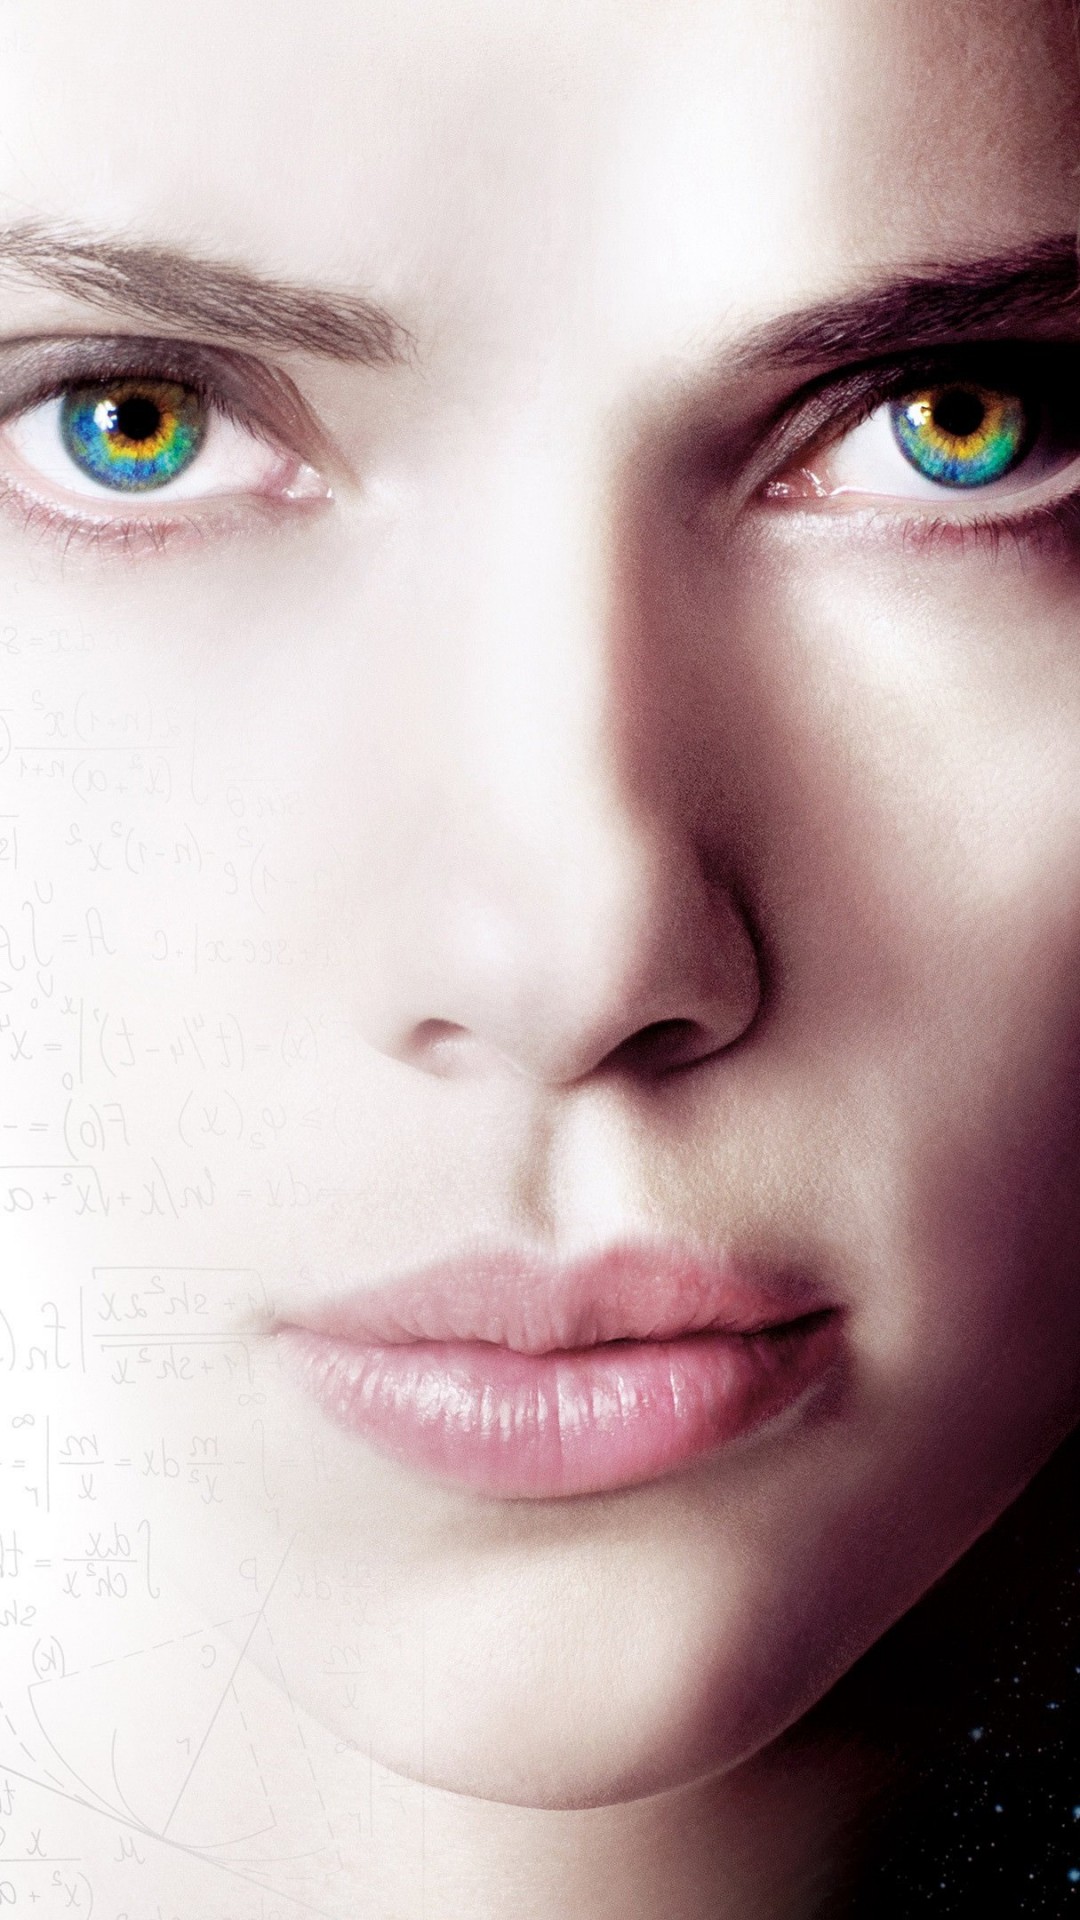 Scarlett Johansson As Lucy Wallpaper for Google Nexus 5X